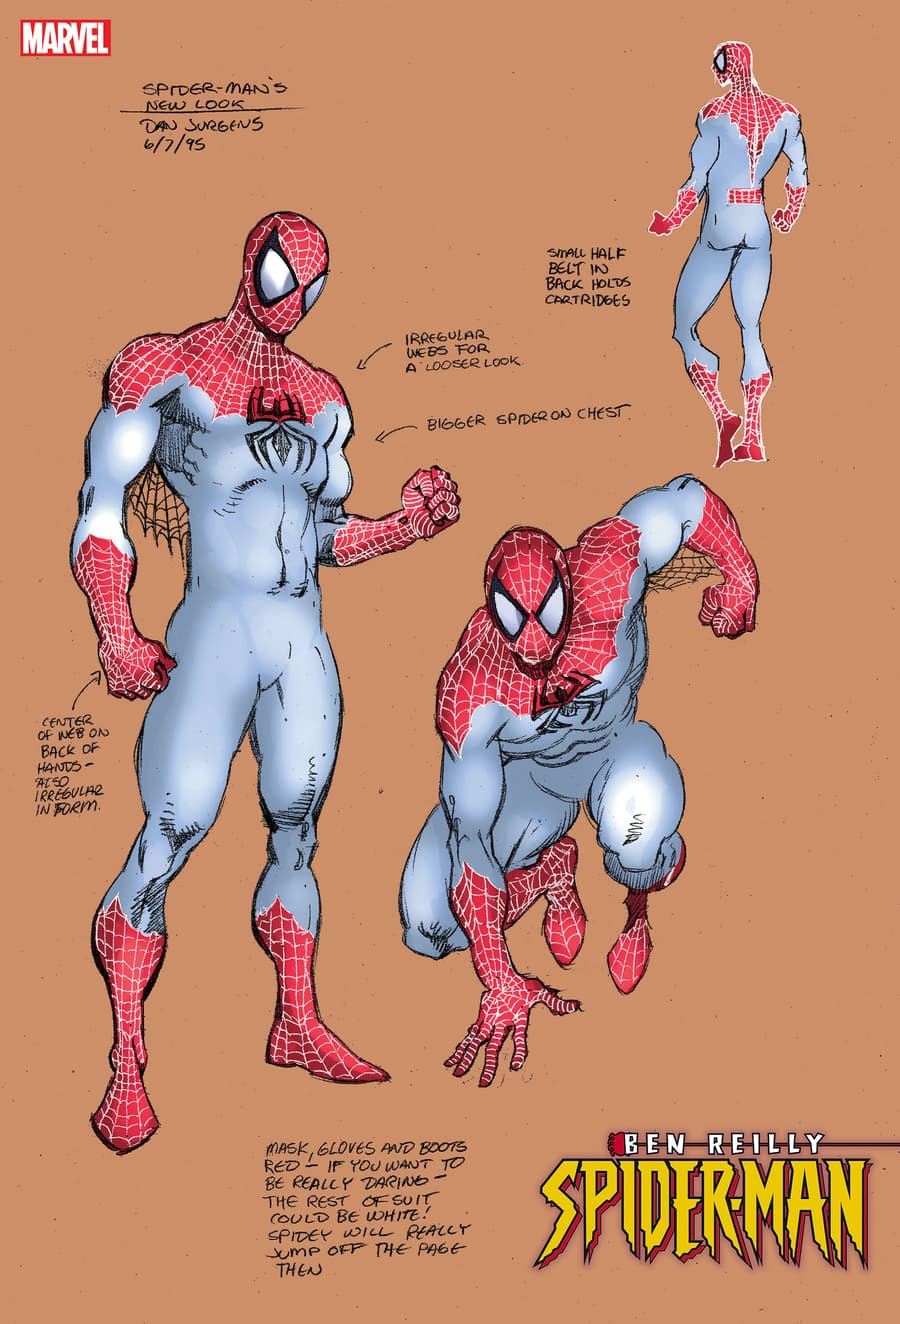 BEN REILLY: SPIDER-MAN #1 Design Variant Cover by DAN JURGENS